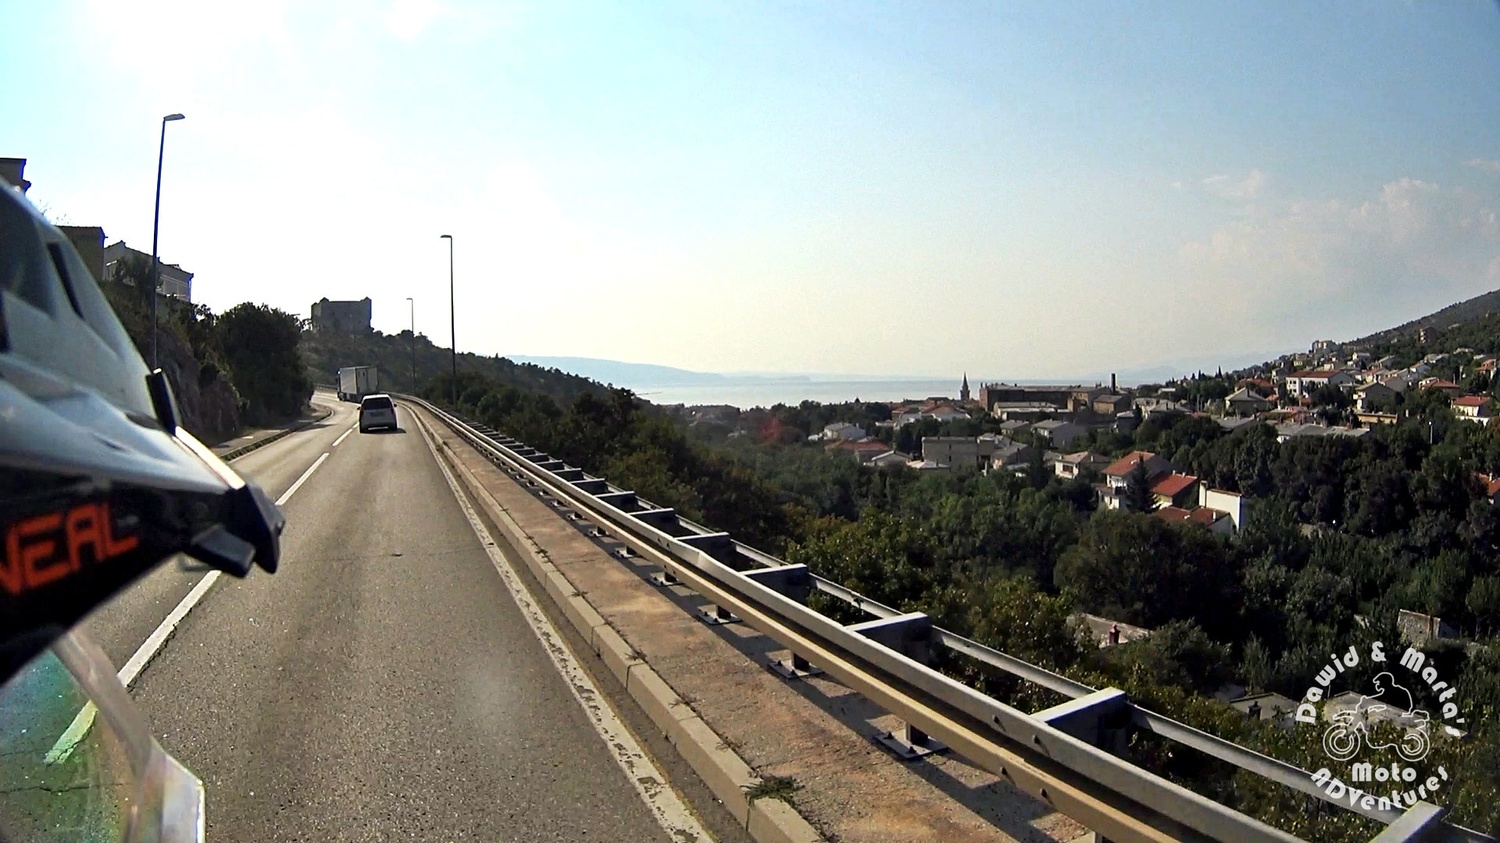 Entering Senj by road 23, Croatia